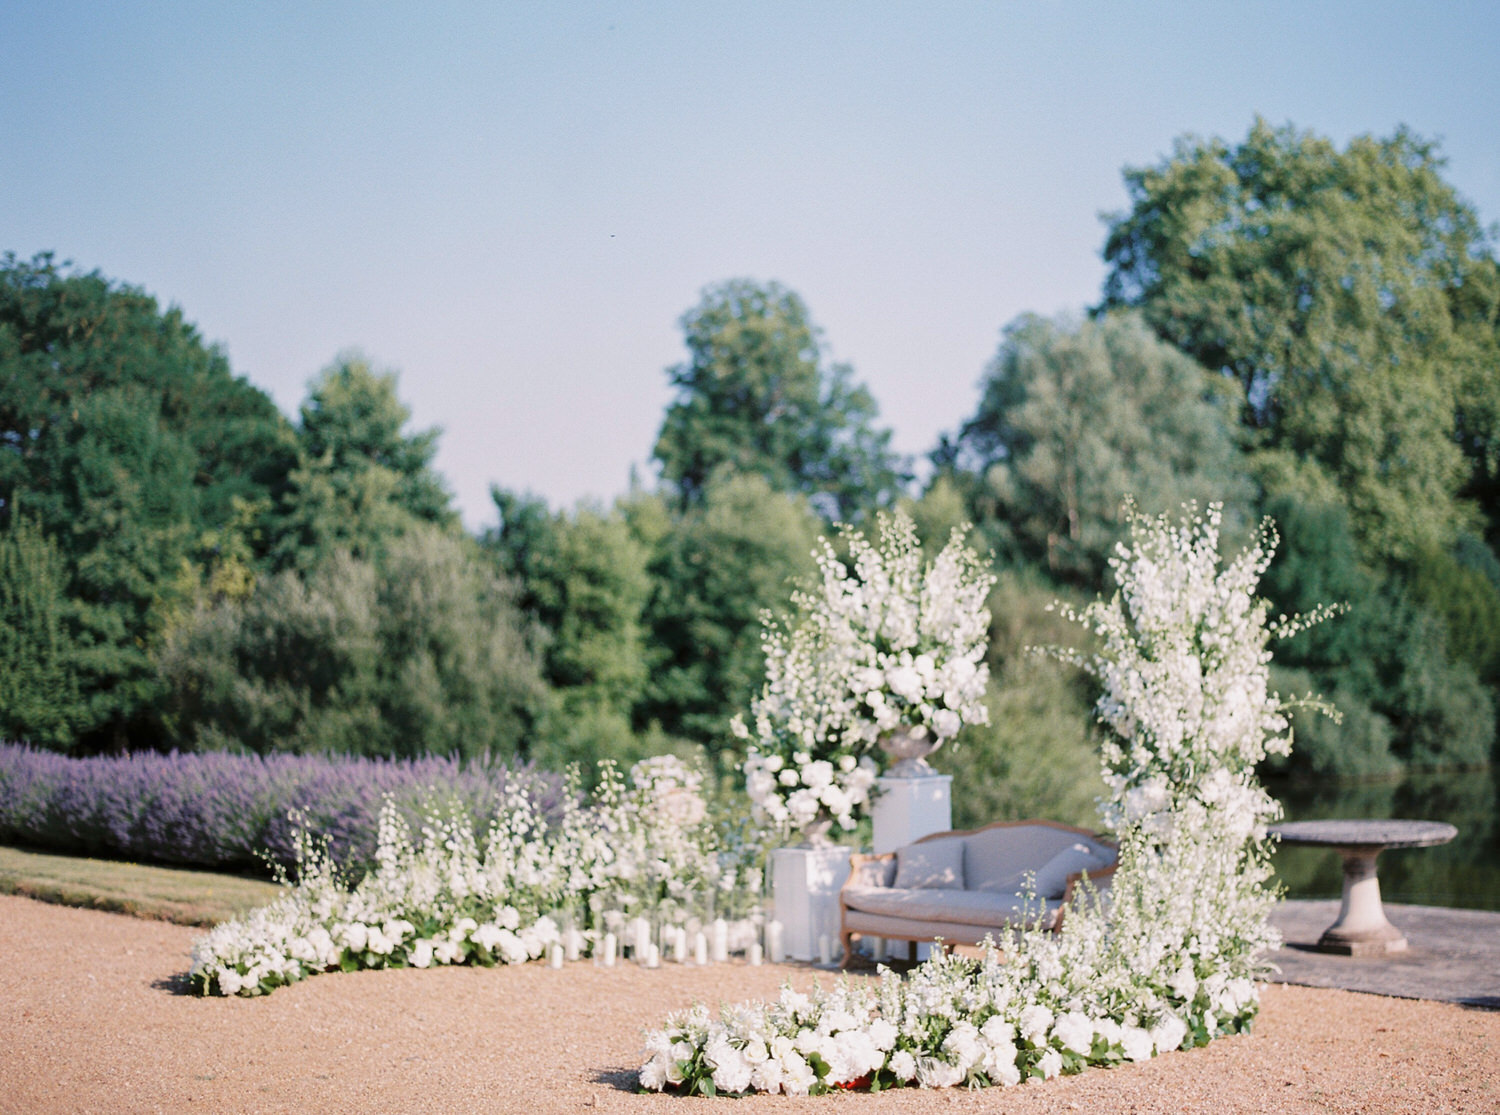 wedding-photography, wedding, destination-weddings - The French fairytale wedding Ben Yew captured